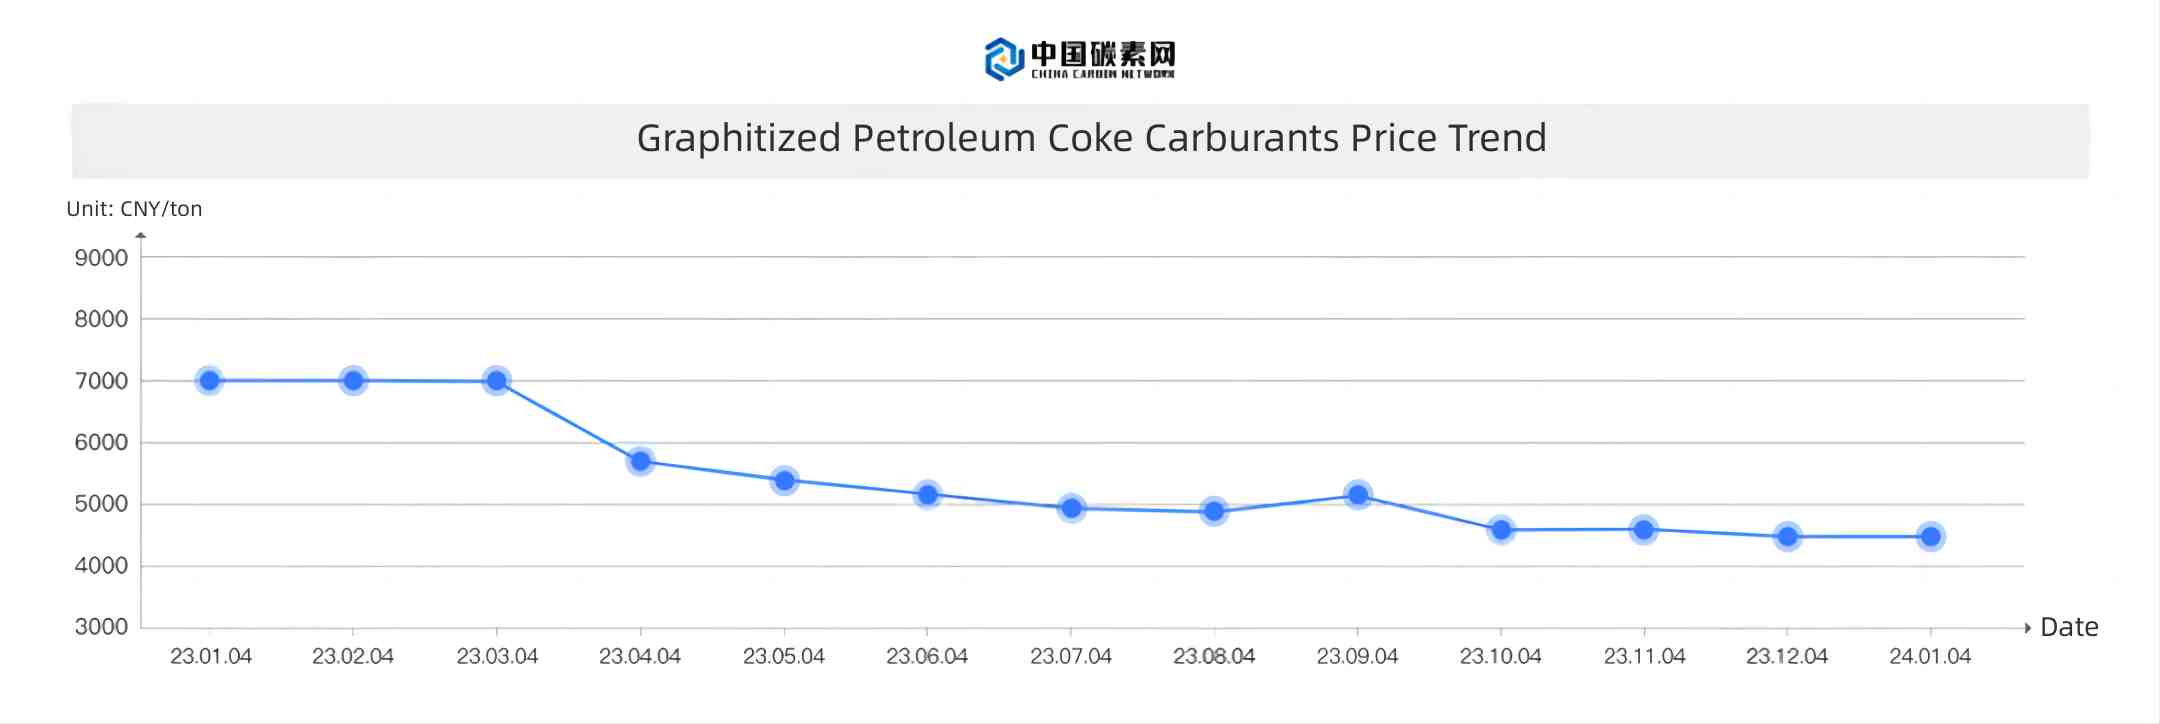 Graphitized Petroleum Coke Carburants Price Trend.jpg